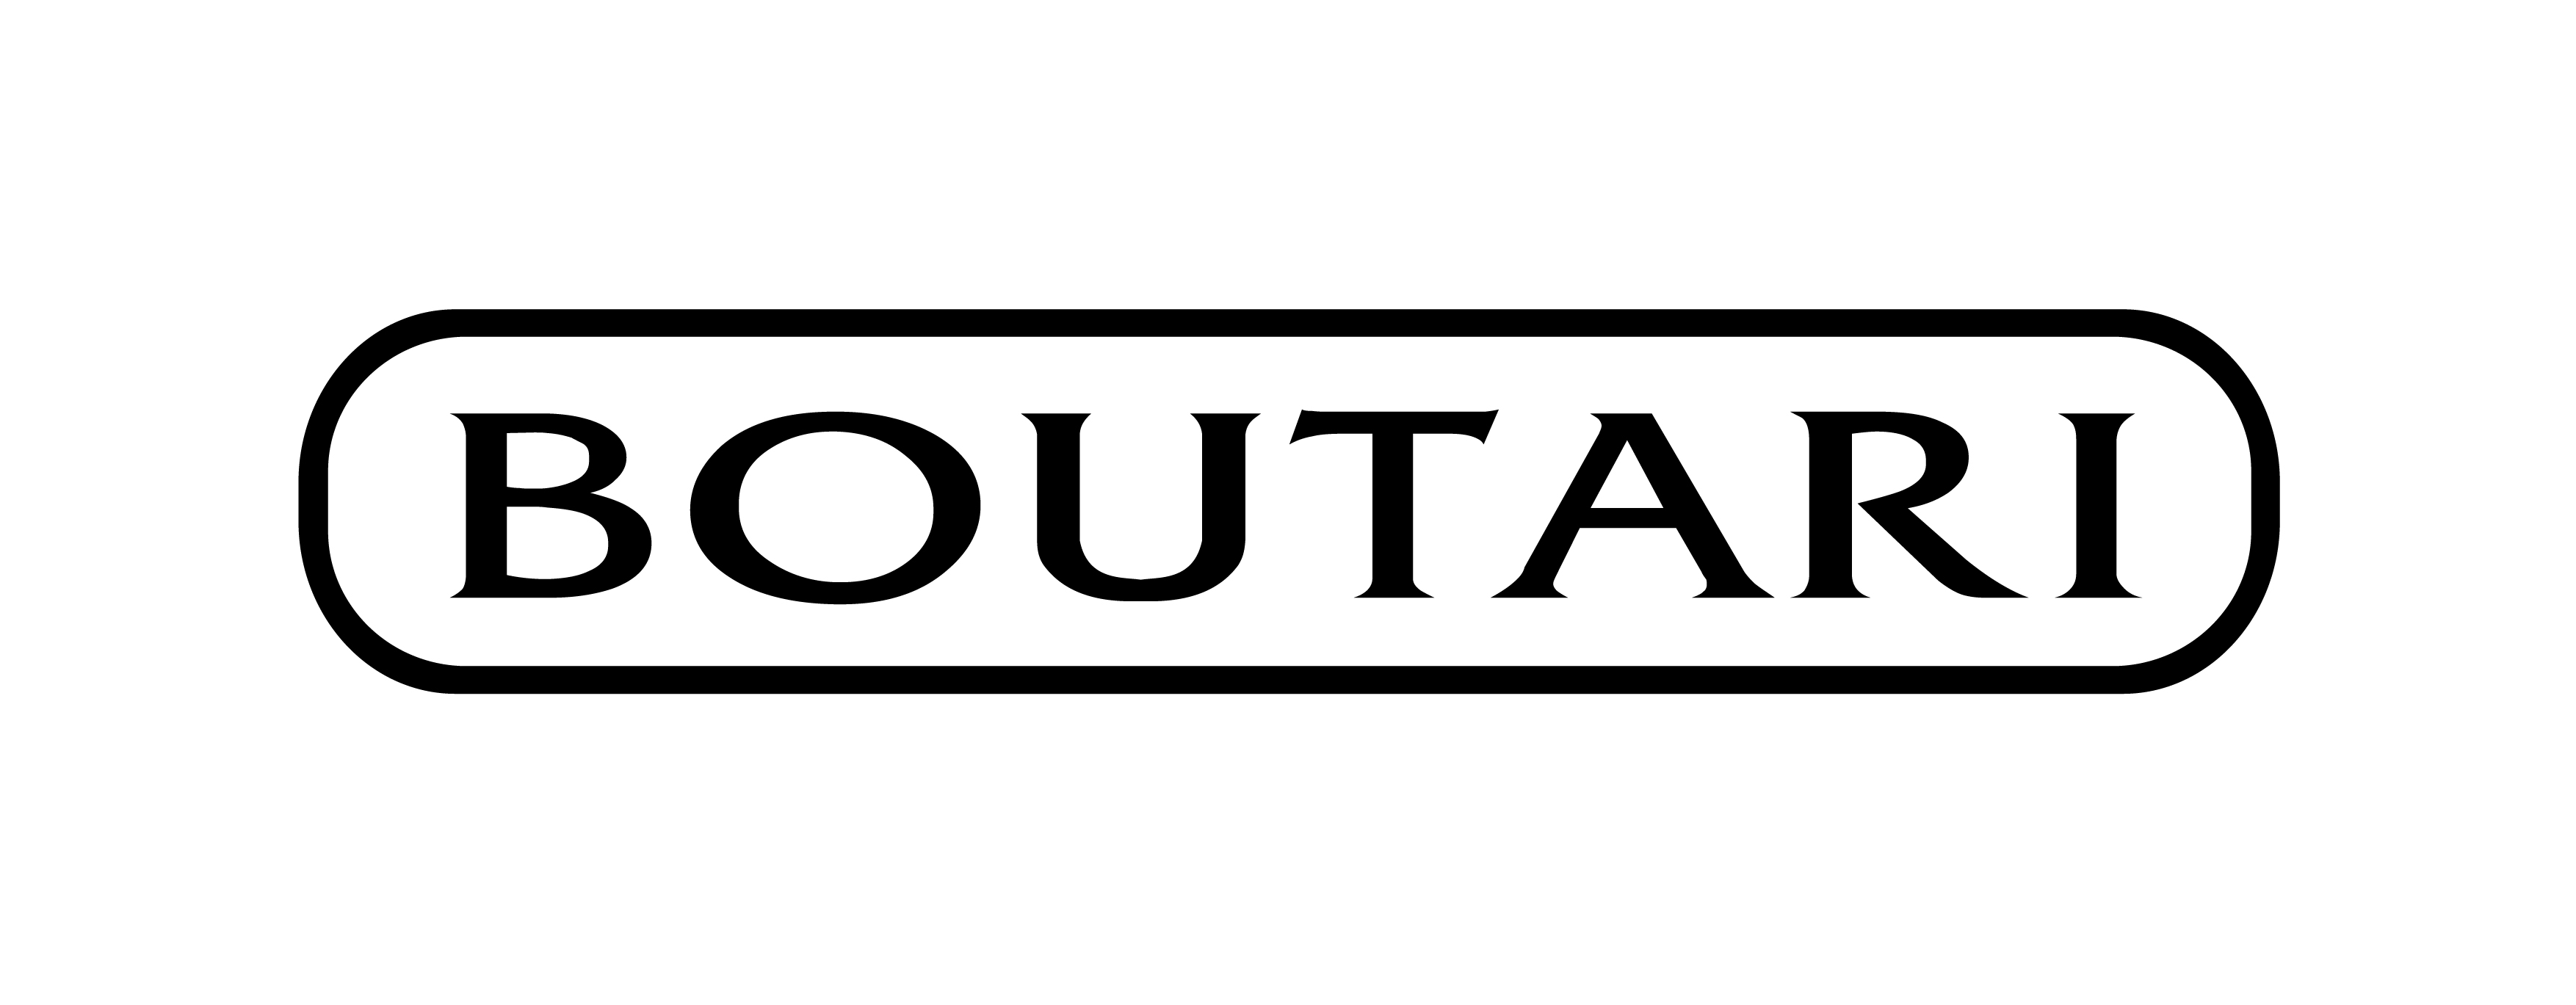 Boutari logo